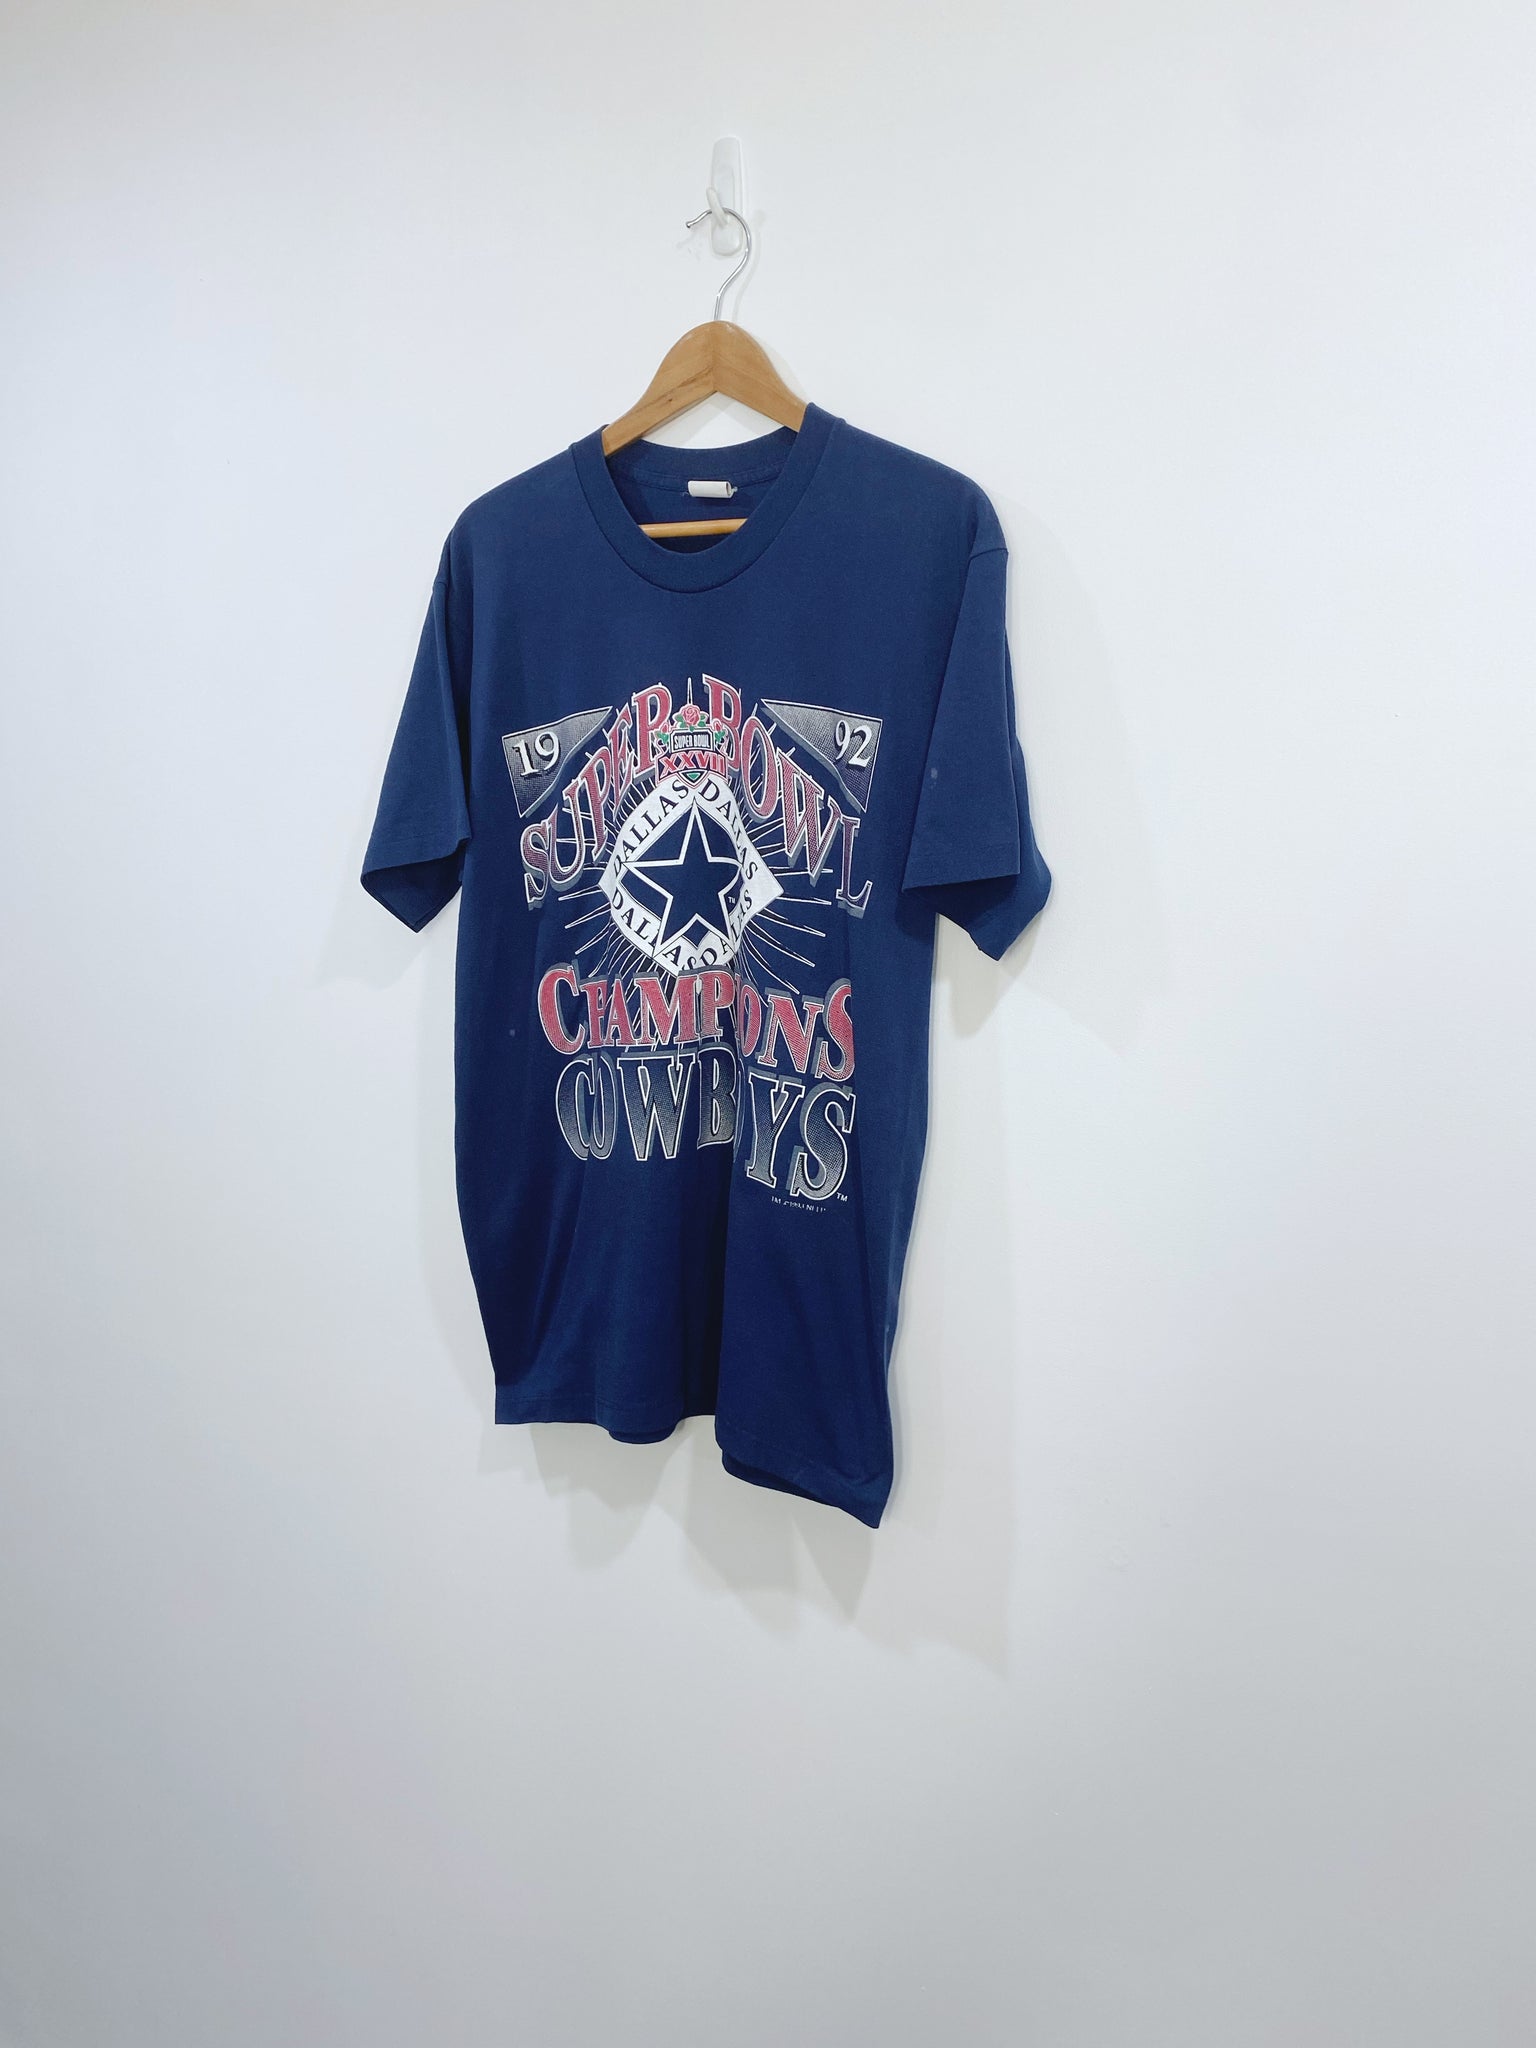 Vintage 1992 Dallas Cowboys Championship T-shirt L